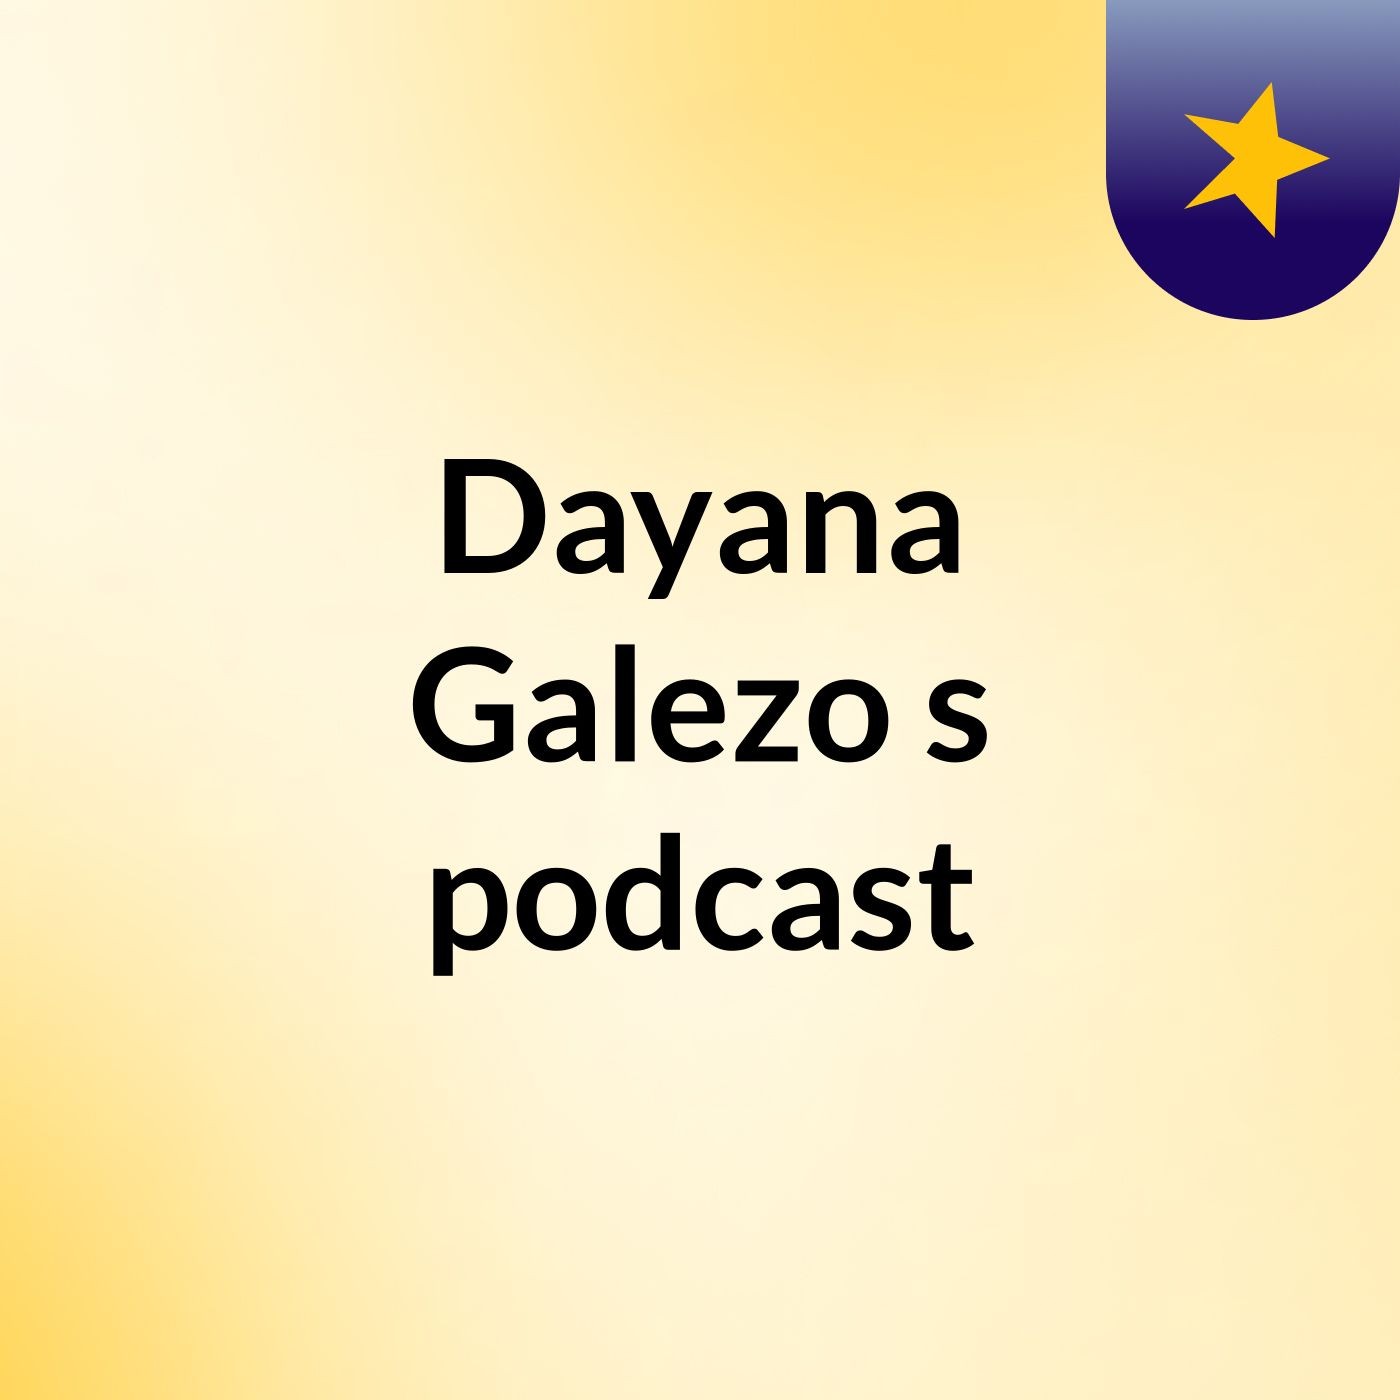 Dayana Galezo's podcast